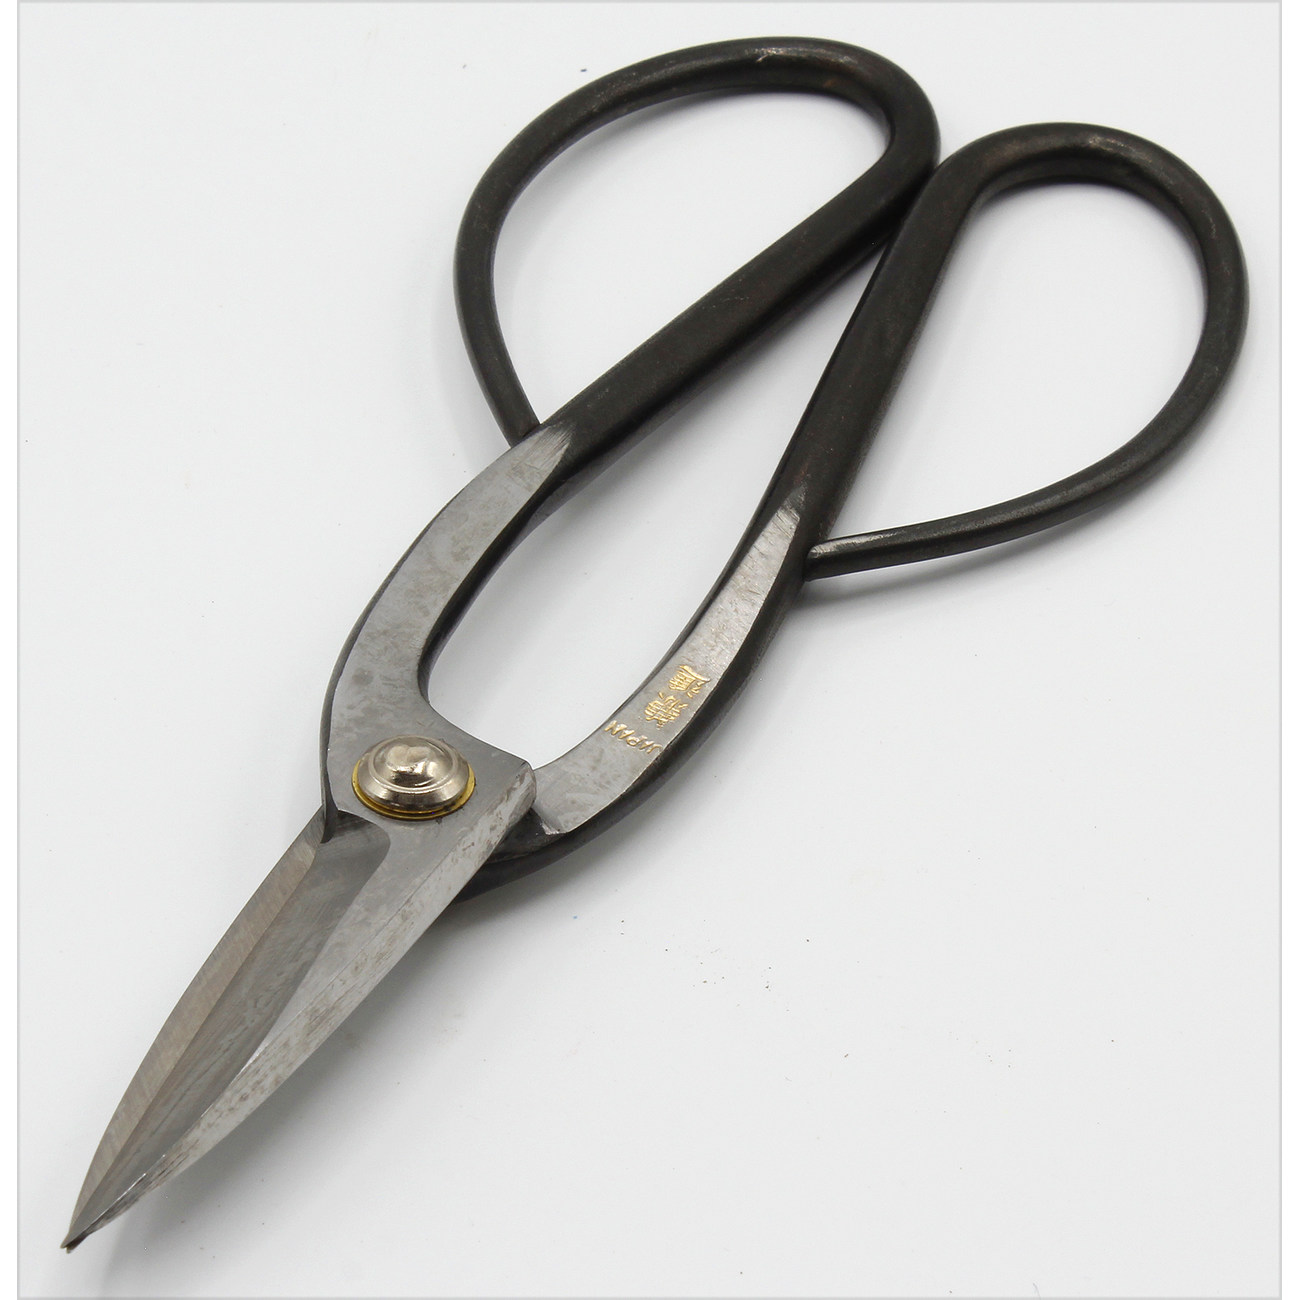 Kaneshin pruning scissors KN602B 195 mm View 2